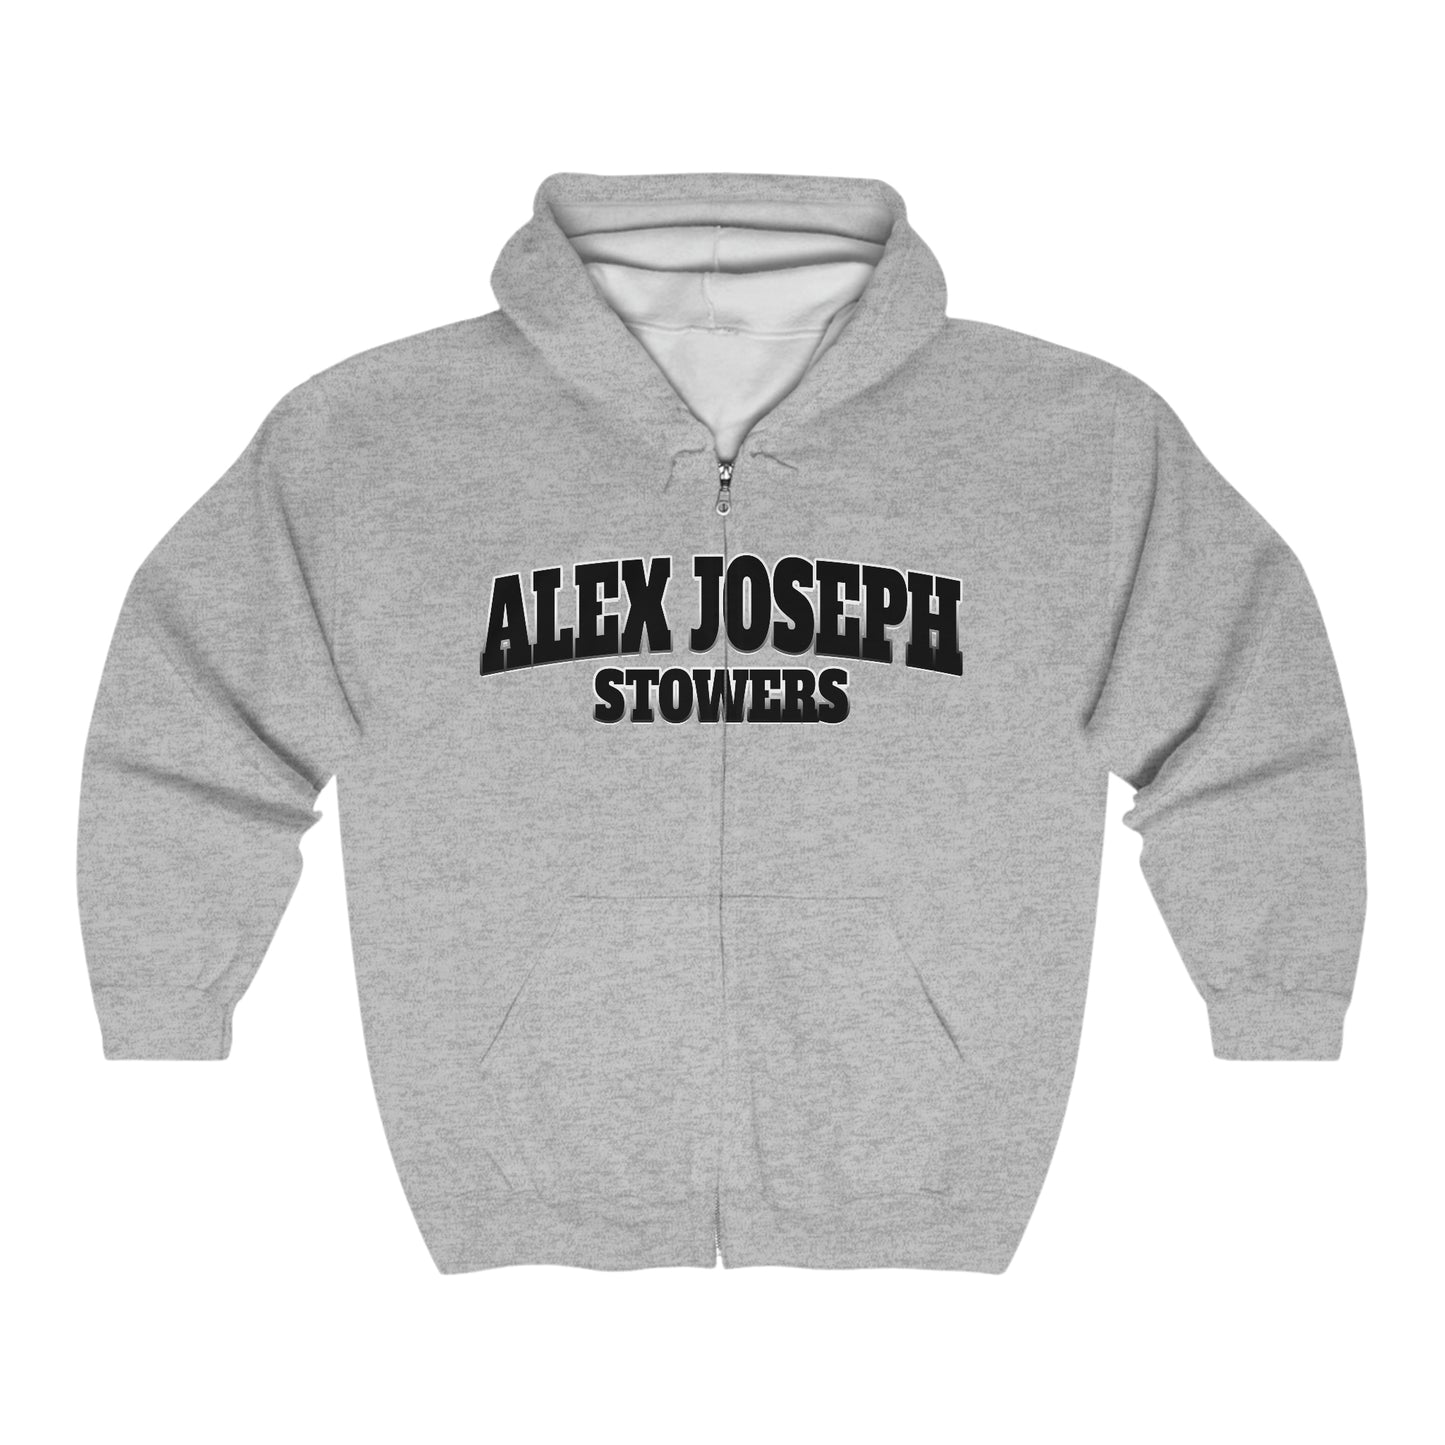 Alex Joseph Stowers Full Zip Hoodie